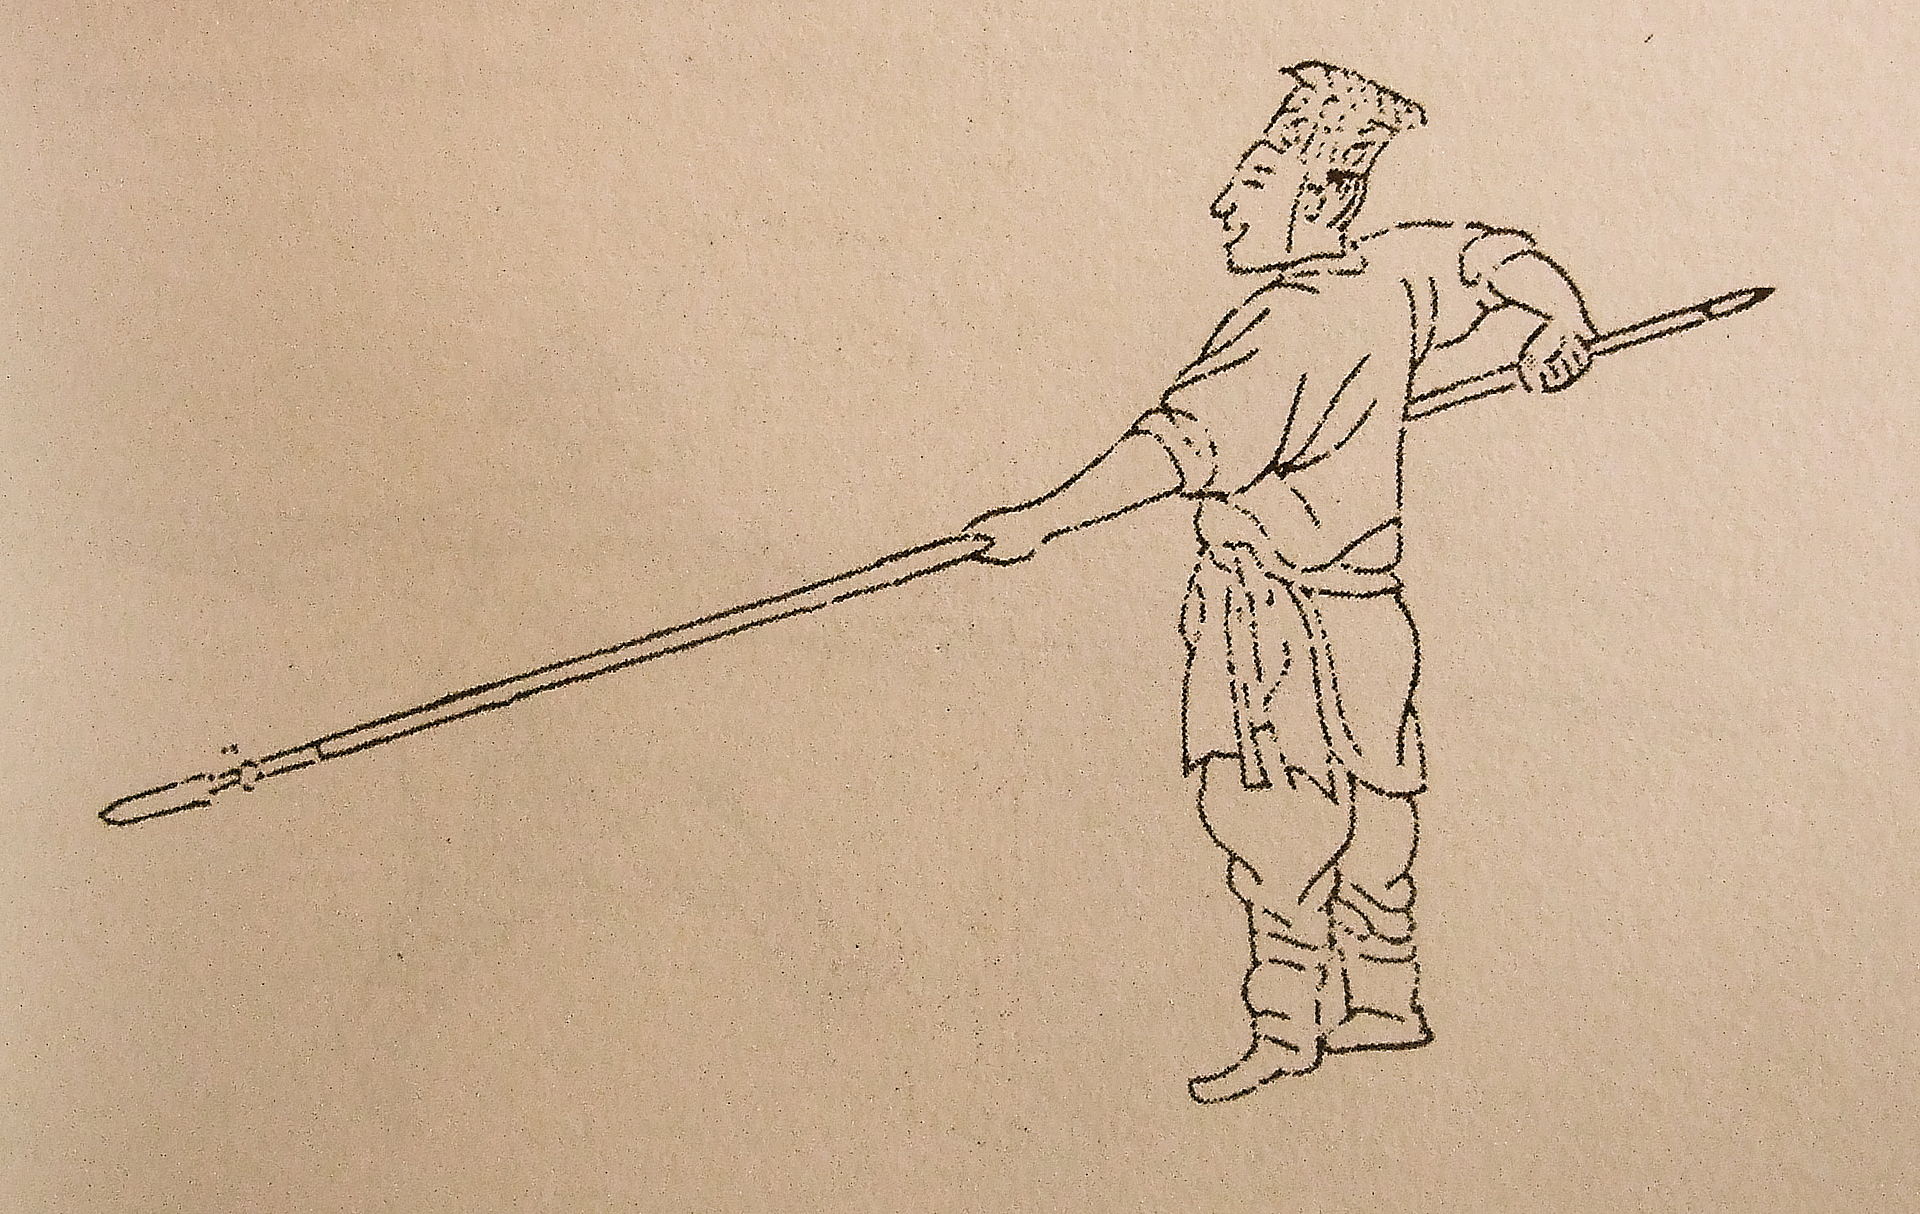 Jangchang illustration from the Muyedobotongji a 18th century Korean martial arts manual